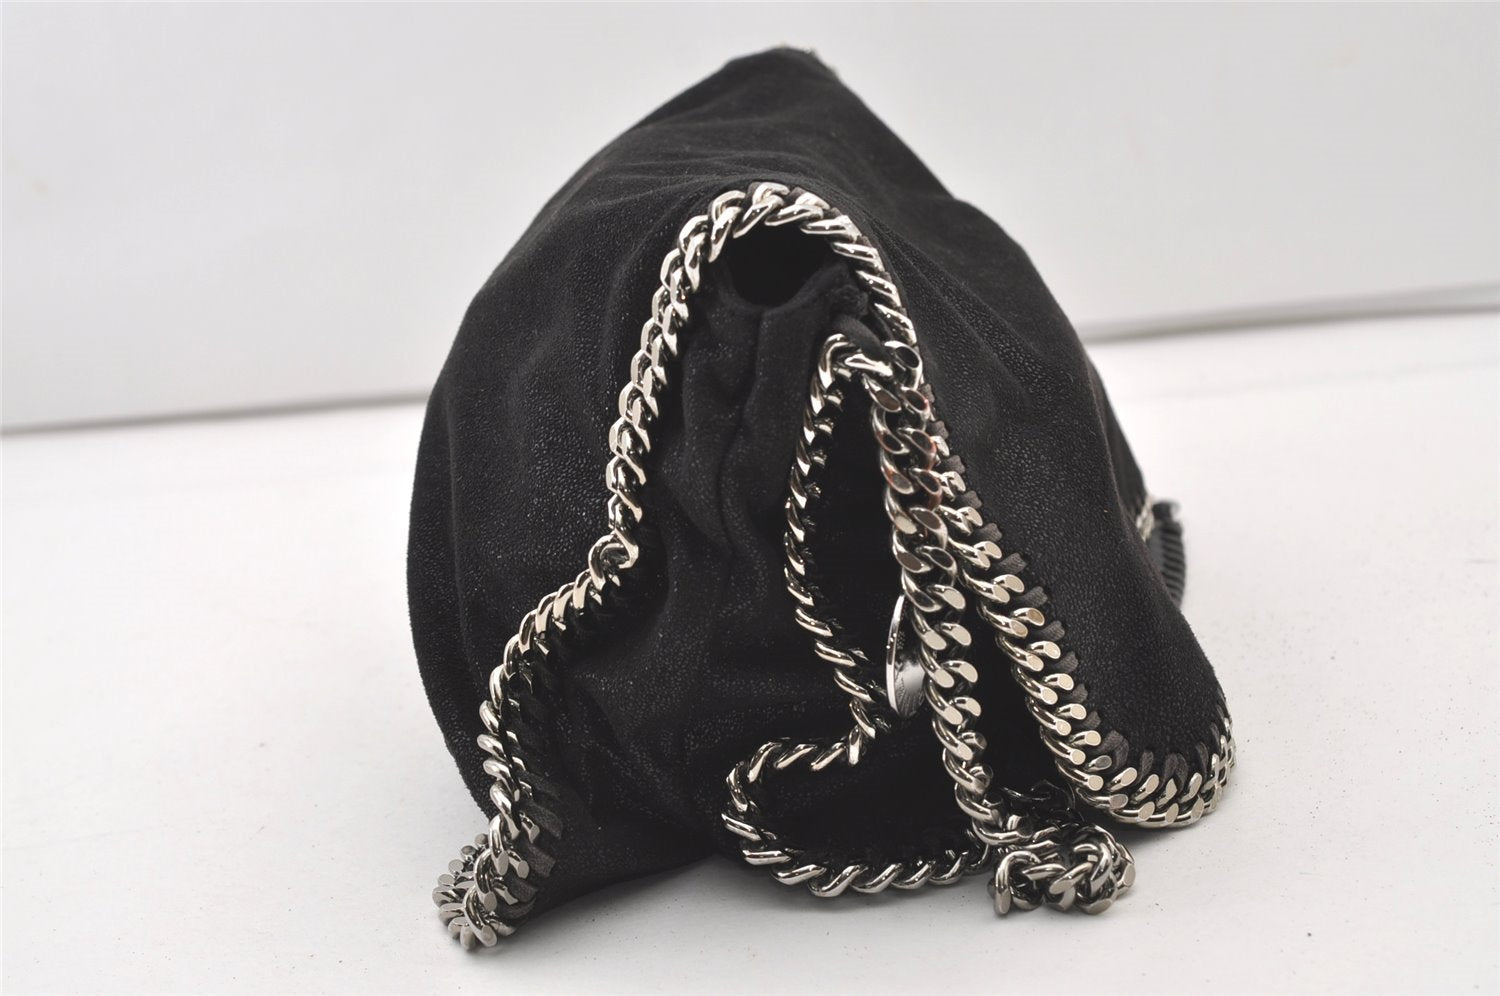 Authentic Stella McCartney Falabella Shoulder Bag Purse Leather Black 2867J